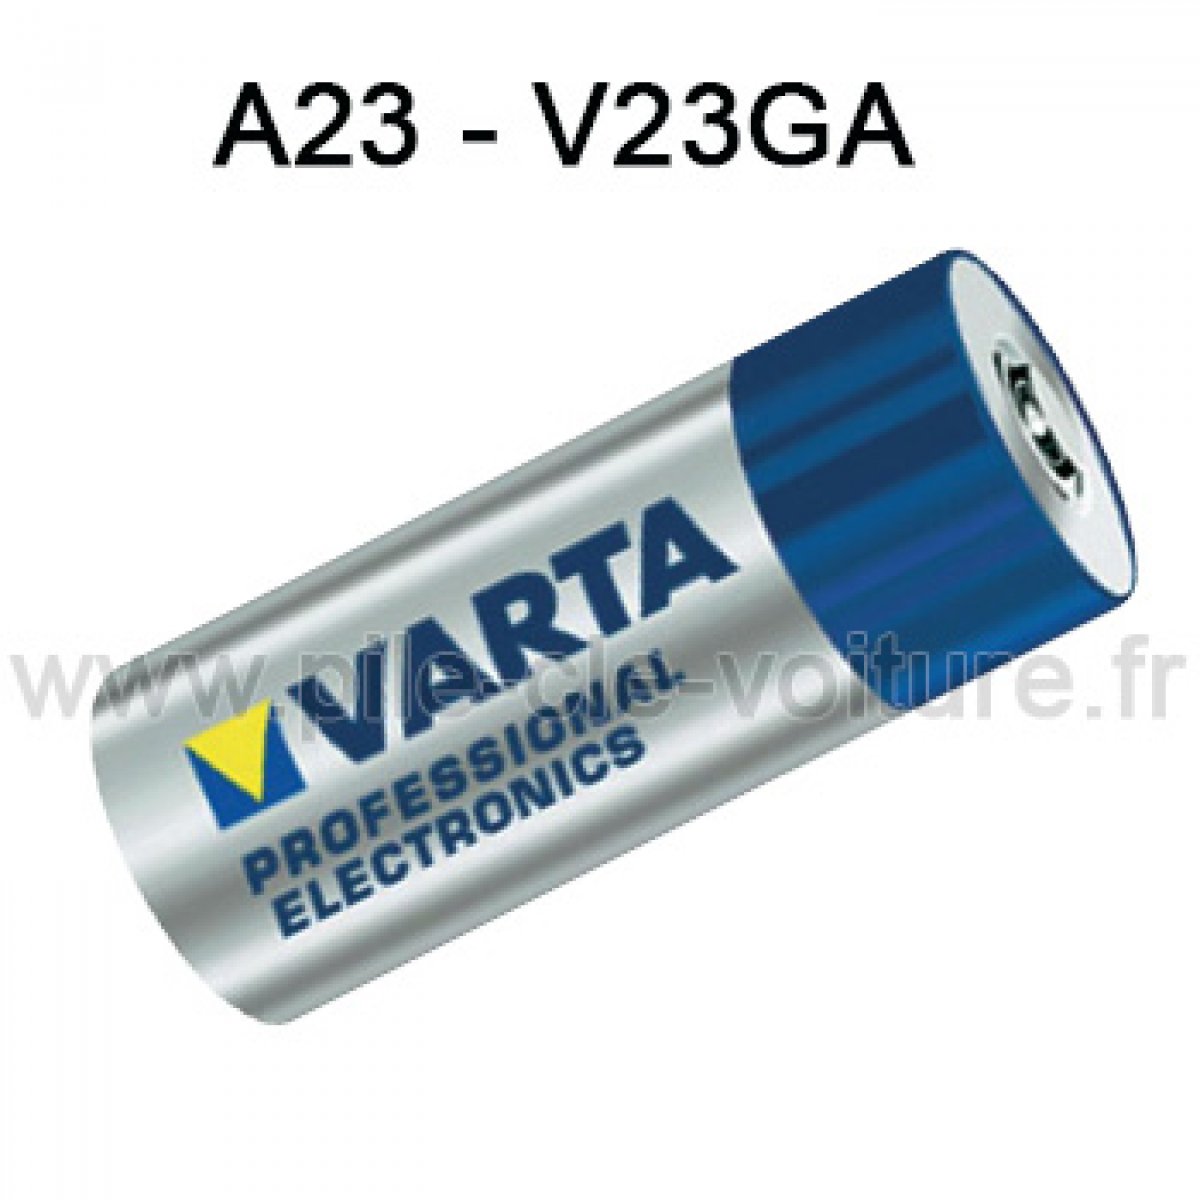 Pile électronique alcaline 12V 23A - V23GA Varta